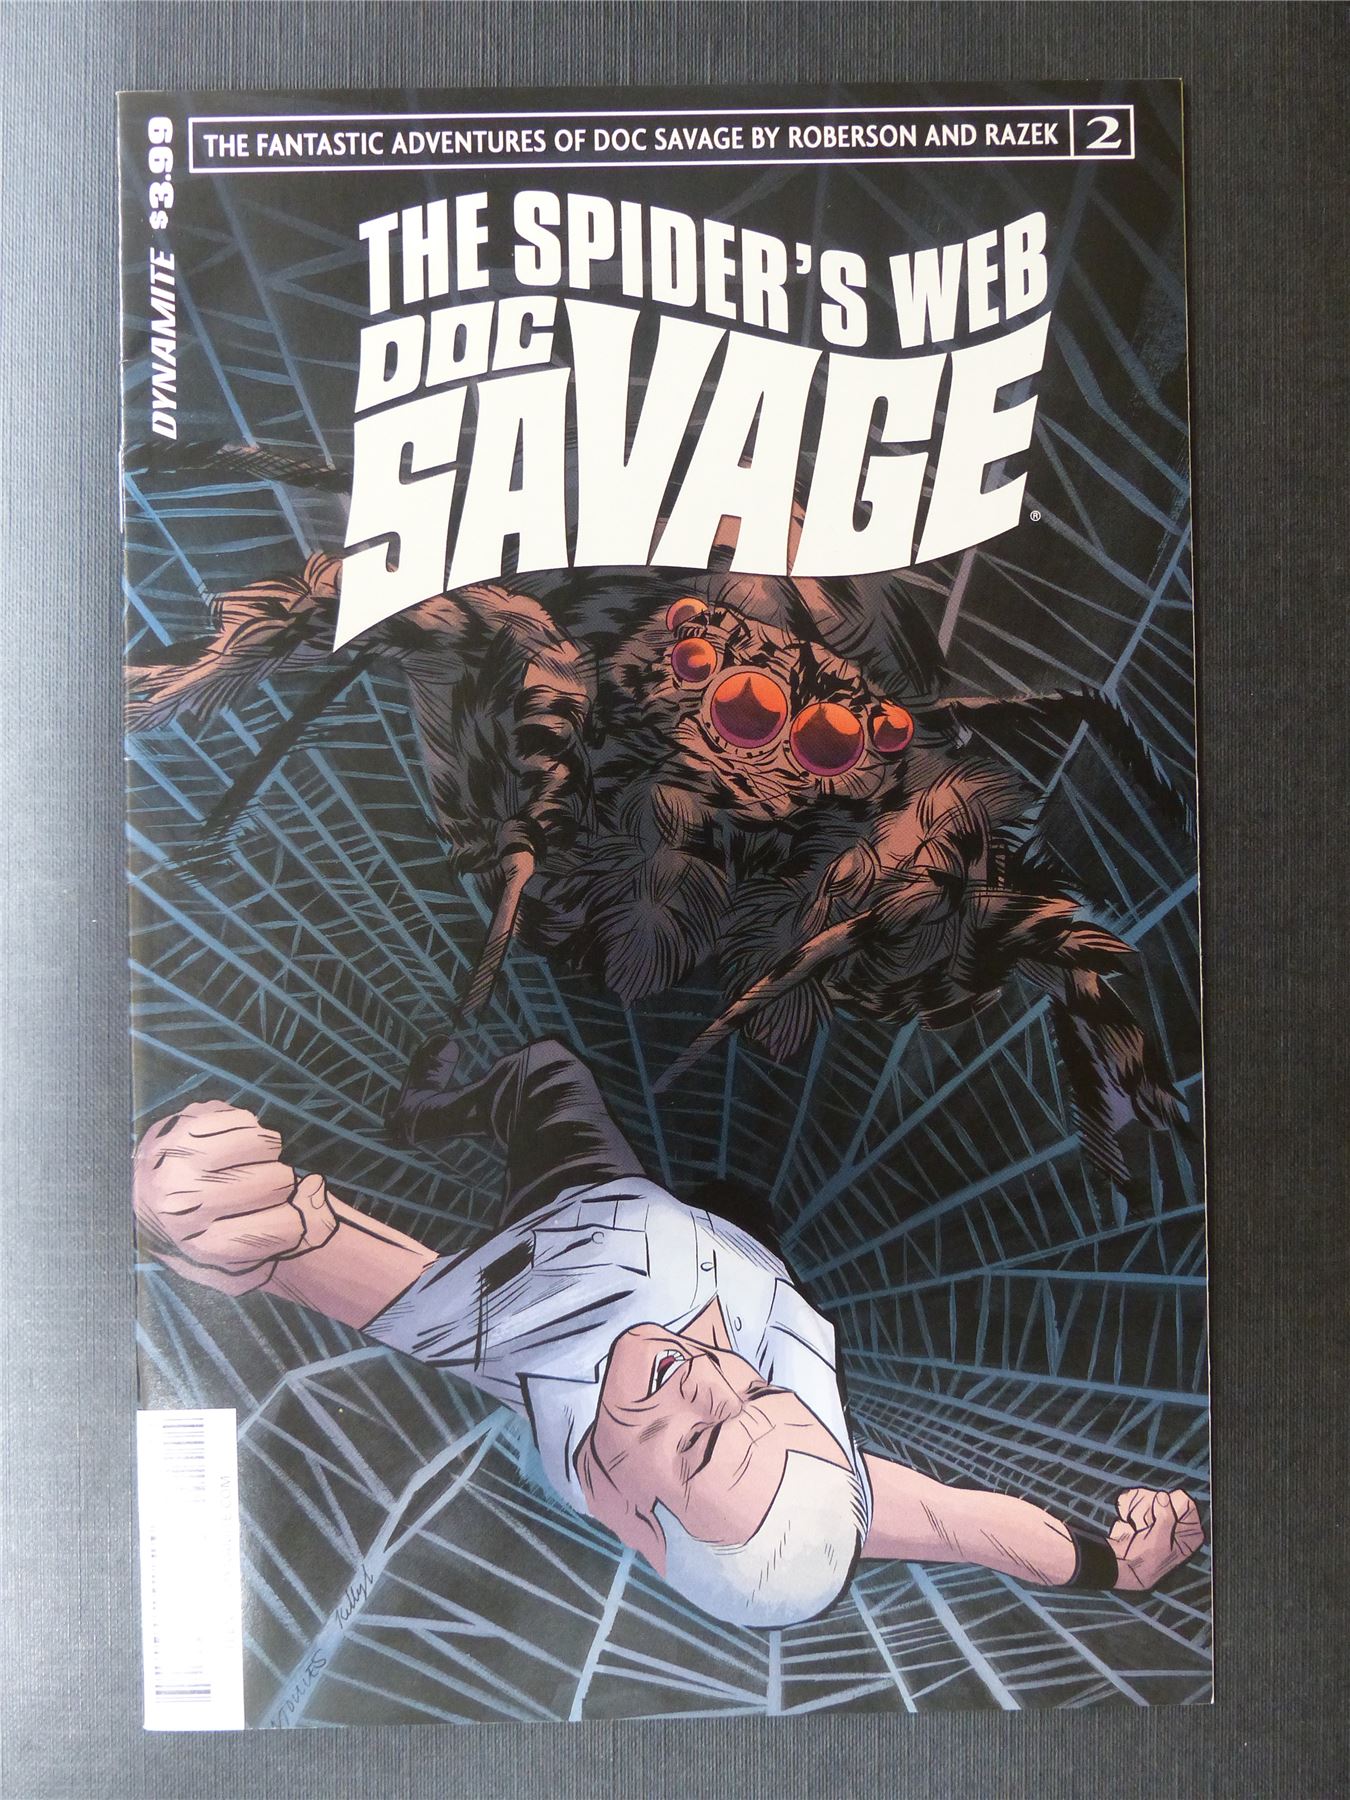 DOC Savage: The SPIder's Web #2 - Dynamite Comics #1WE